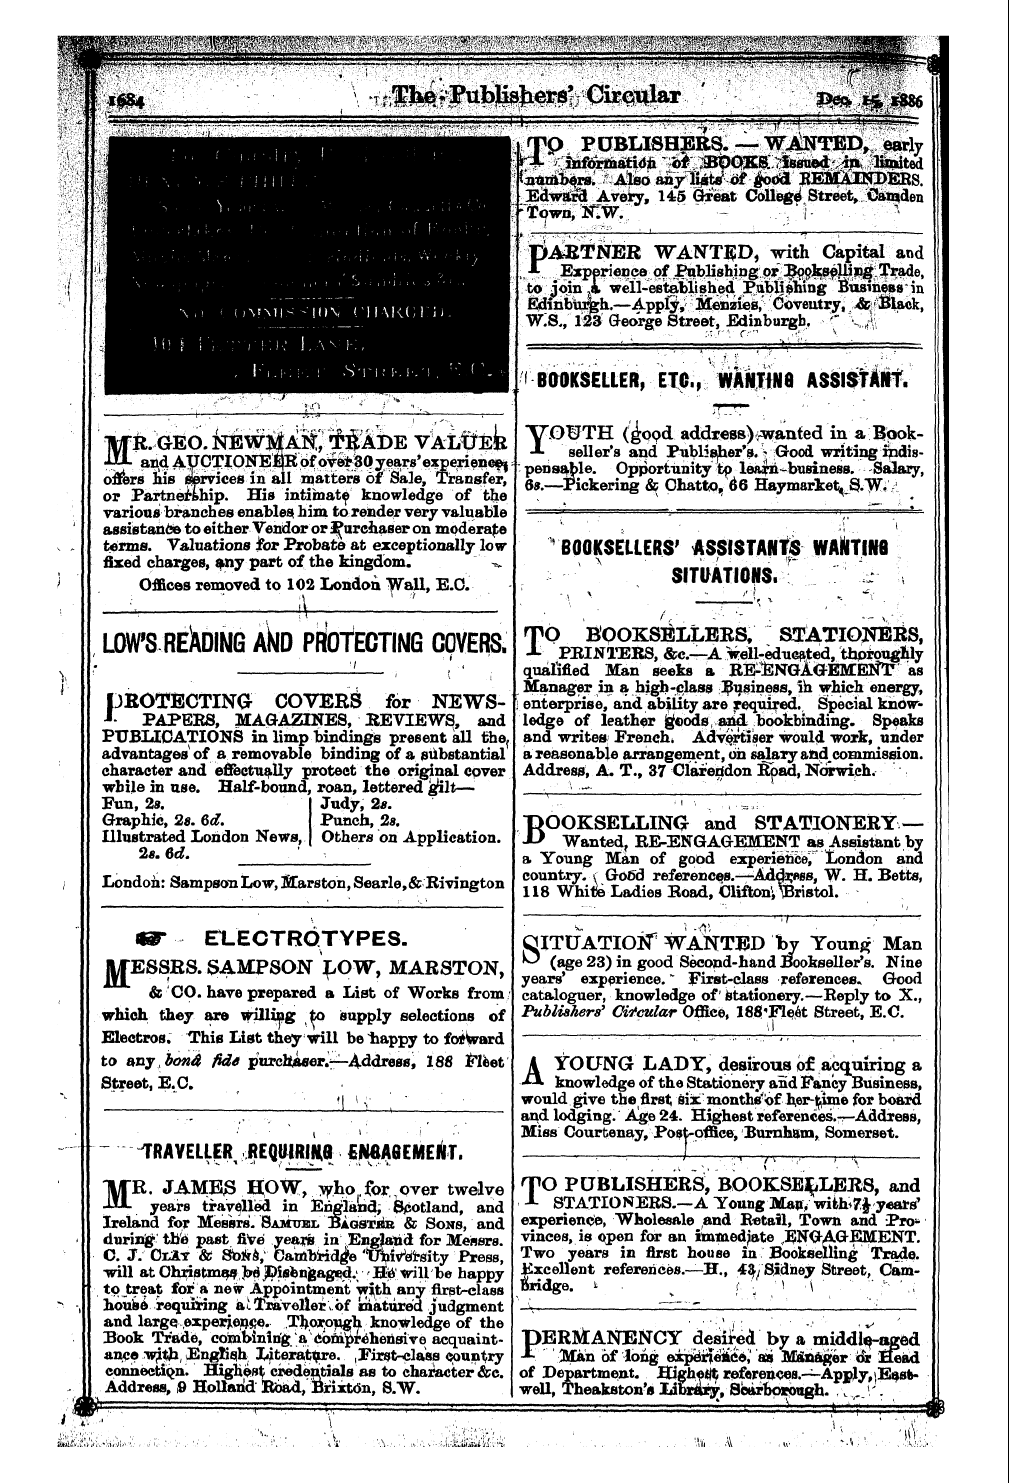 Publishers’ Circular (1880-1890): jS F Y, 1st edition - Ad04809